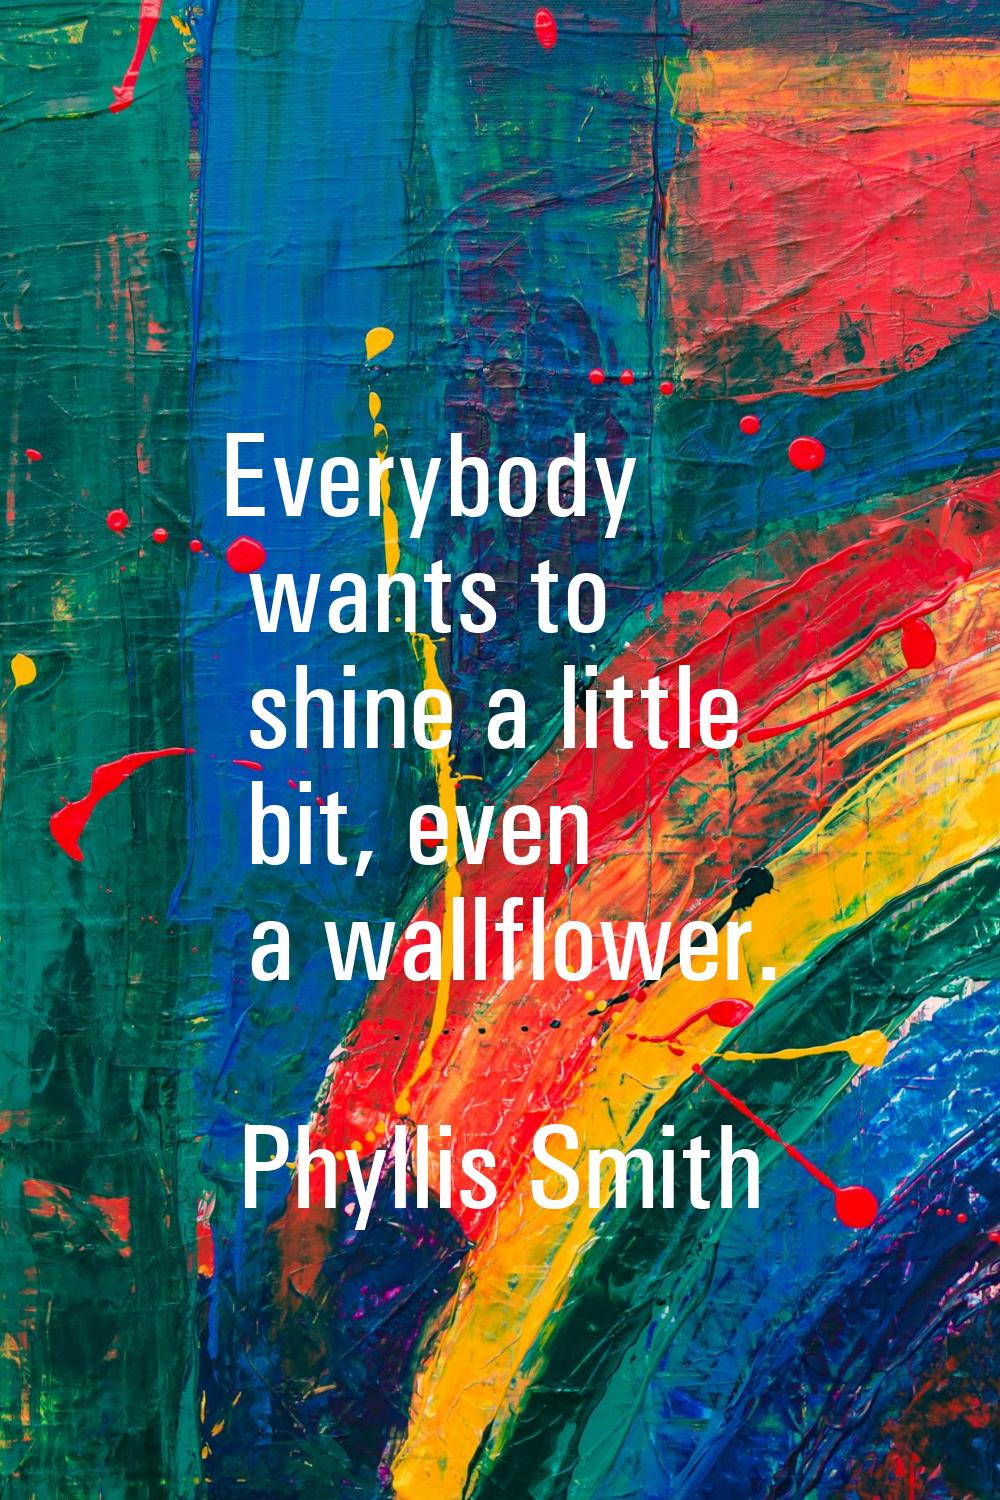 Everybody wants to shine a little bit, even a wallflower.